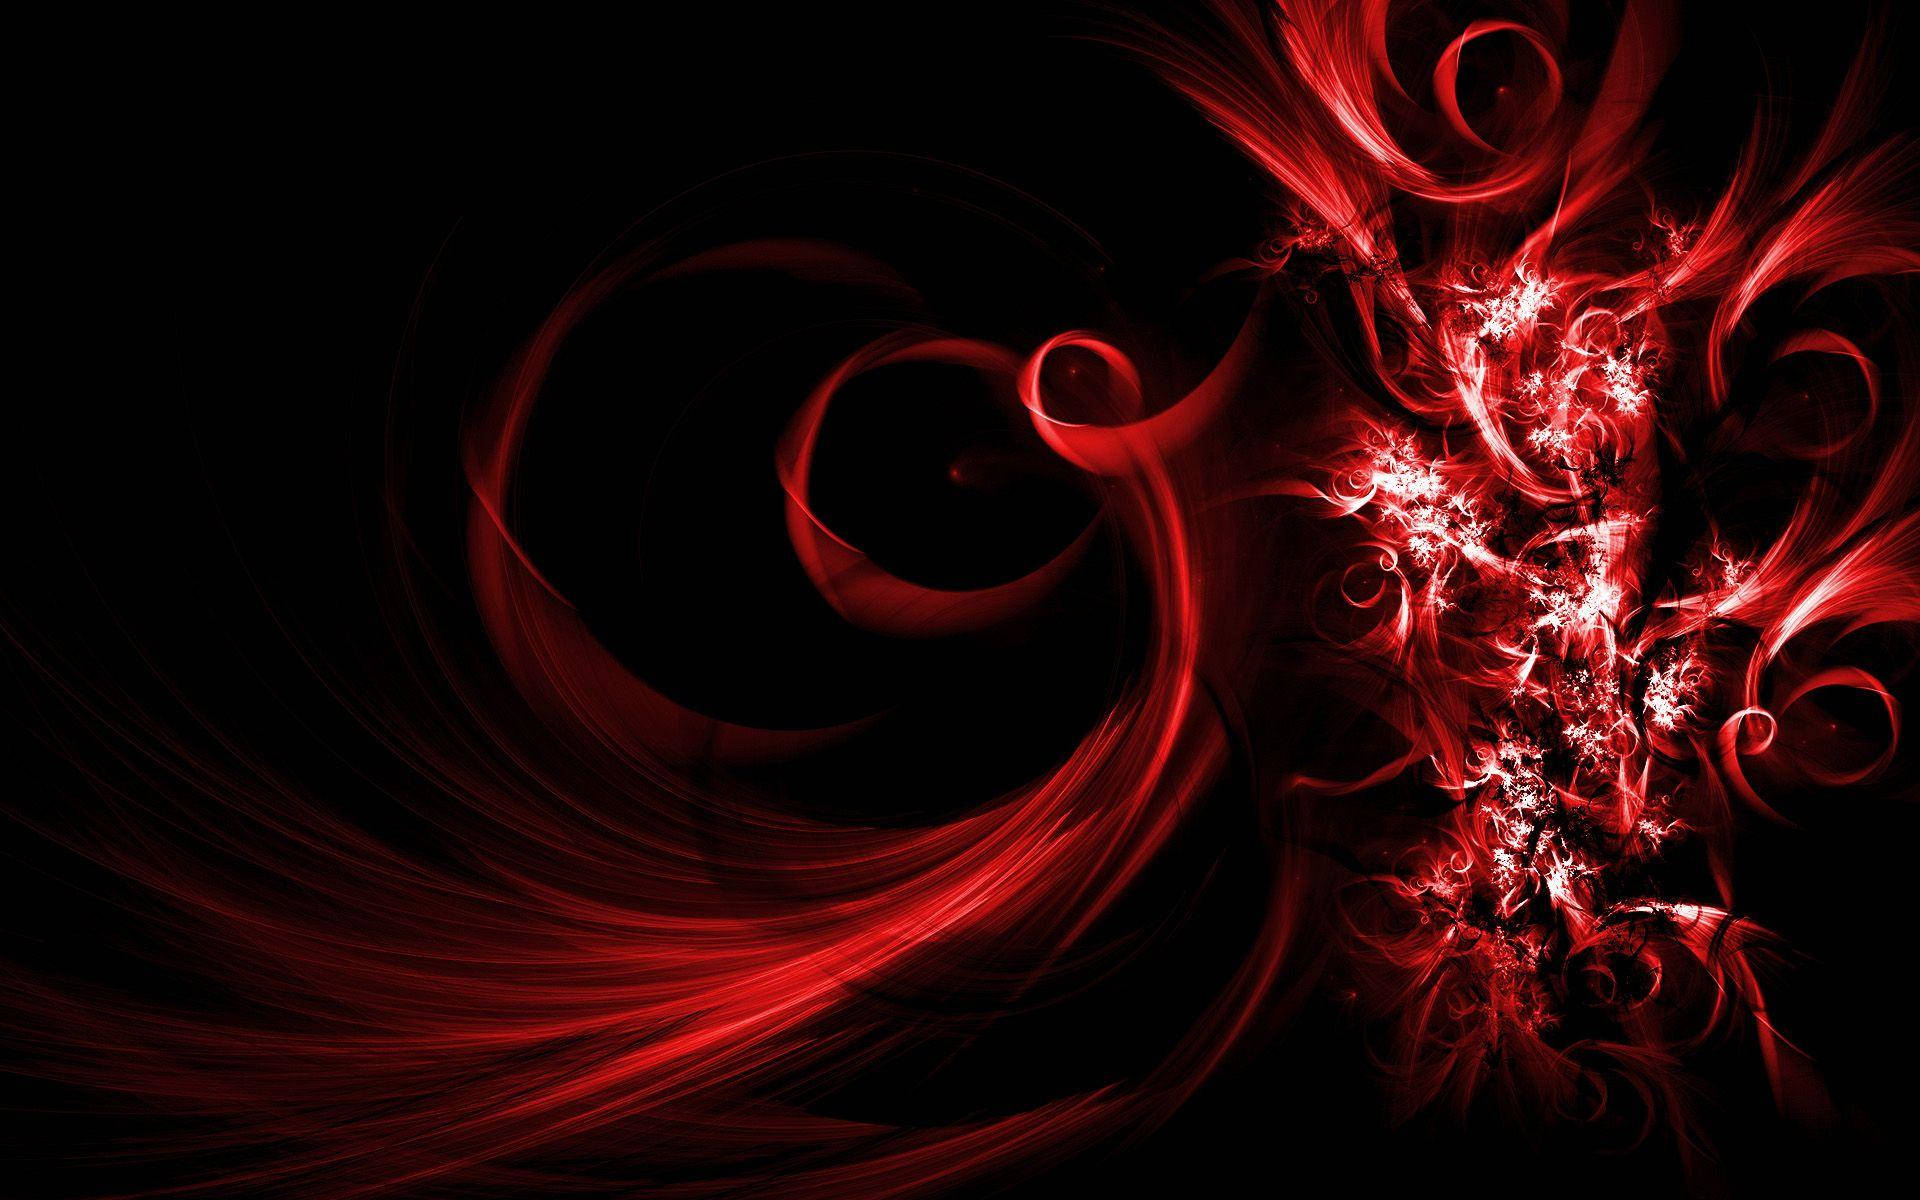 Neon Red Abstract Swirls Wallpaper